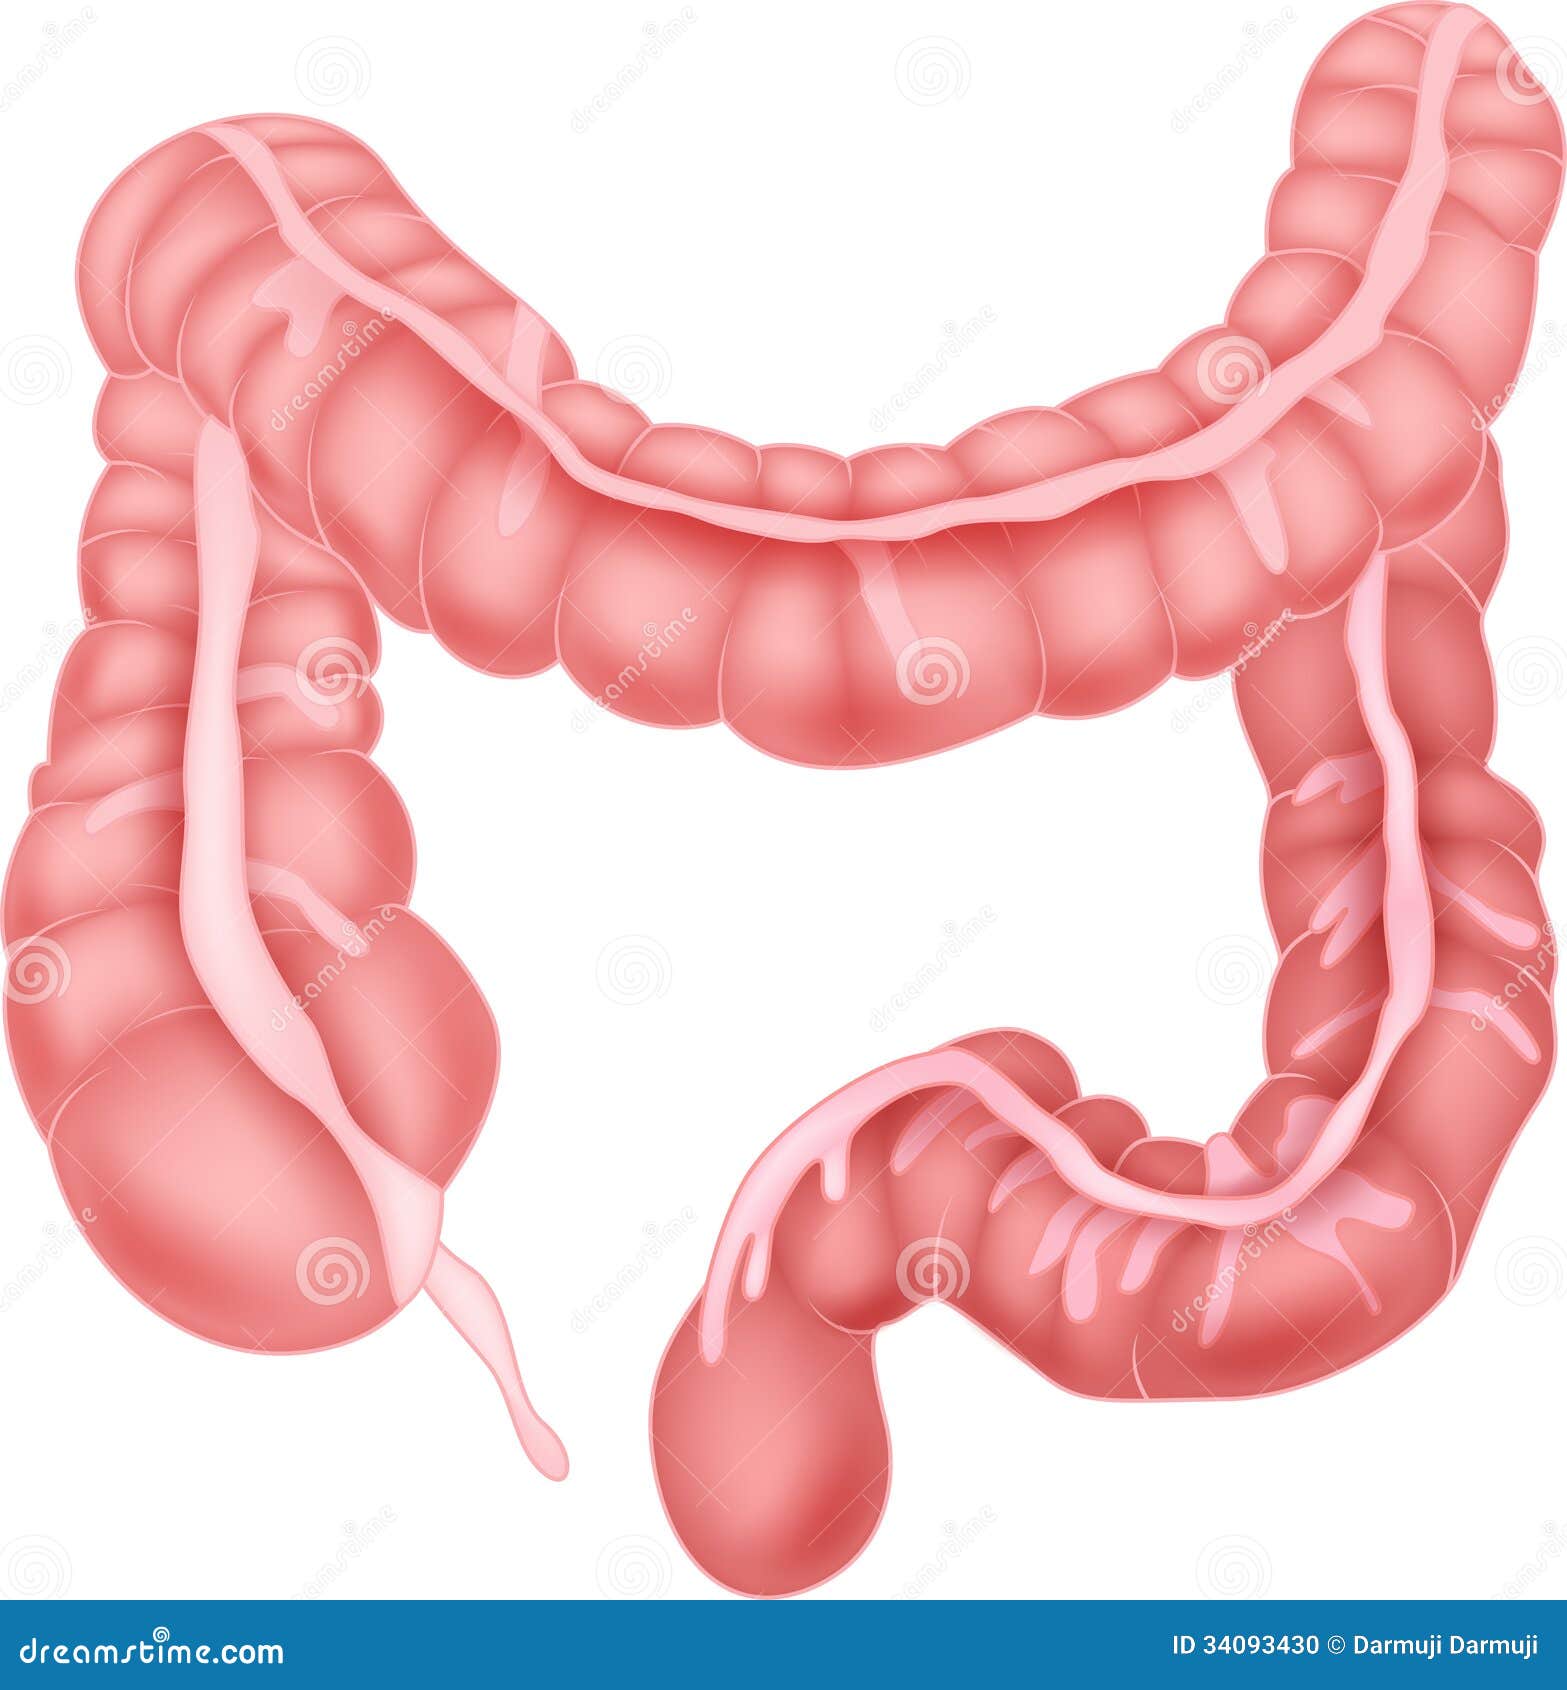 Human Intestine Anatomy Stock Photo - Image: 34093430